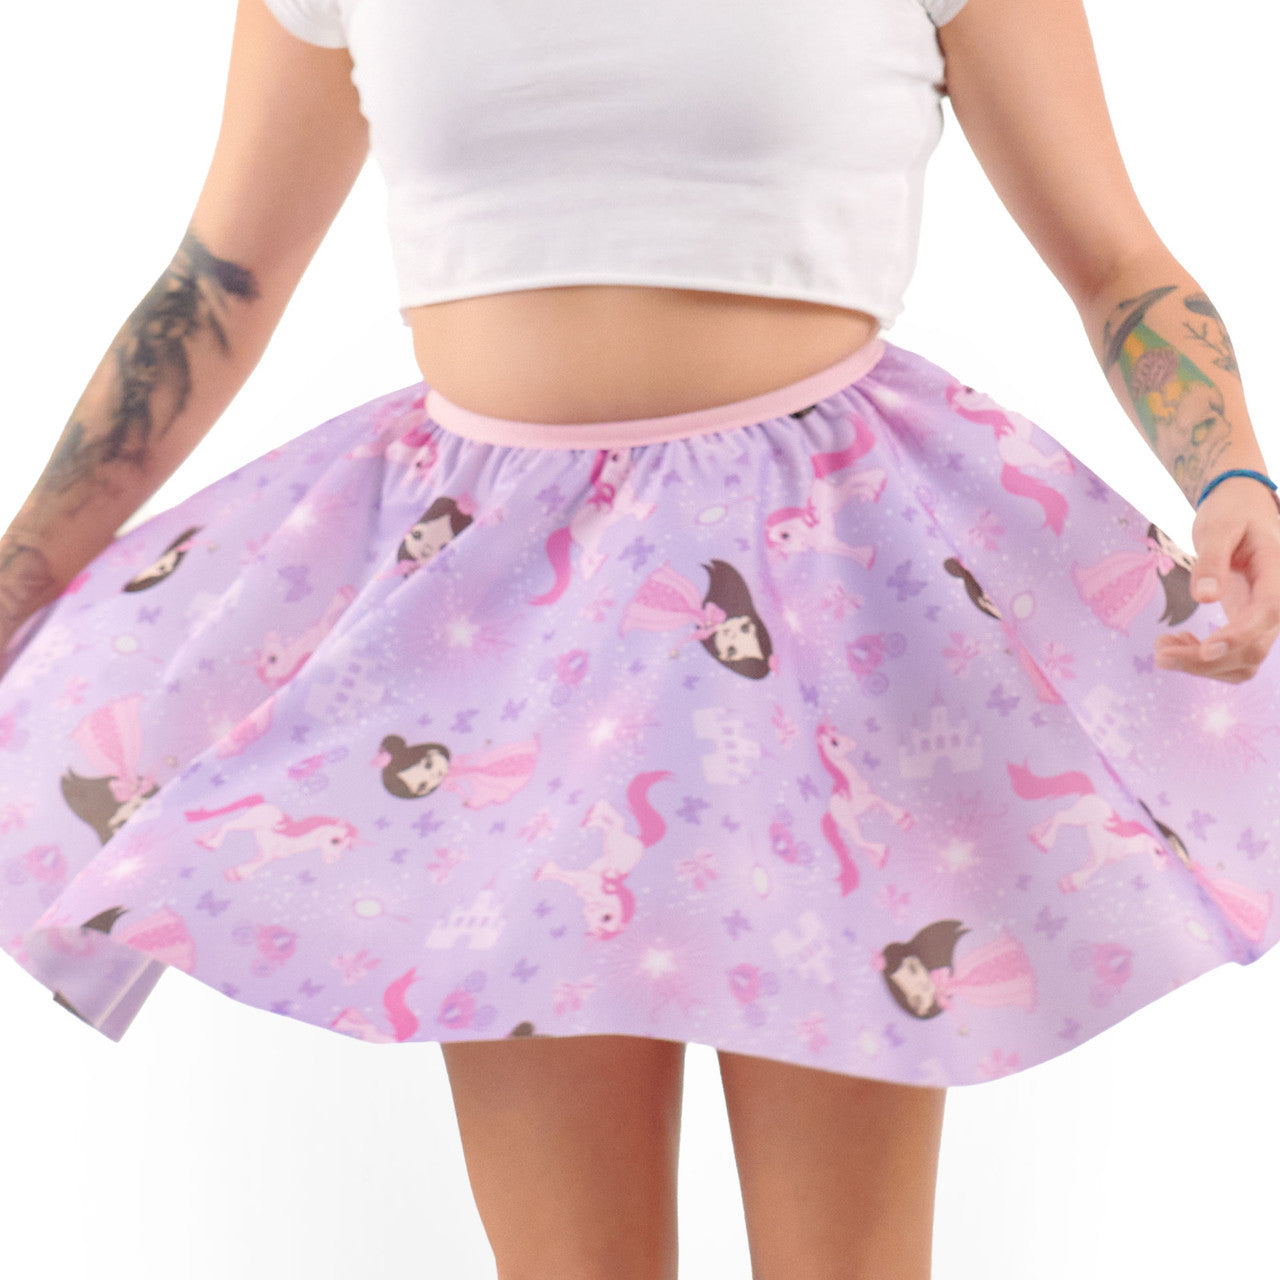 Rearz - Skater Skirt - Princess Pink